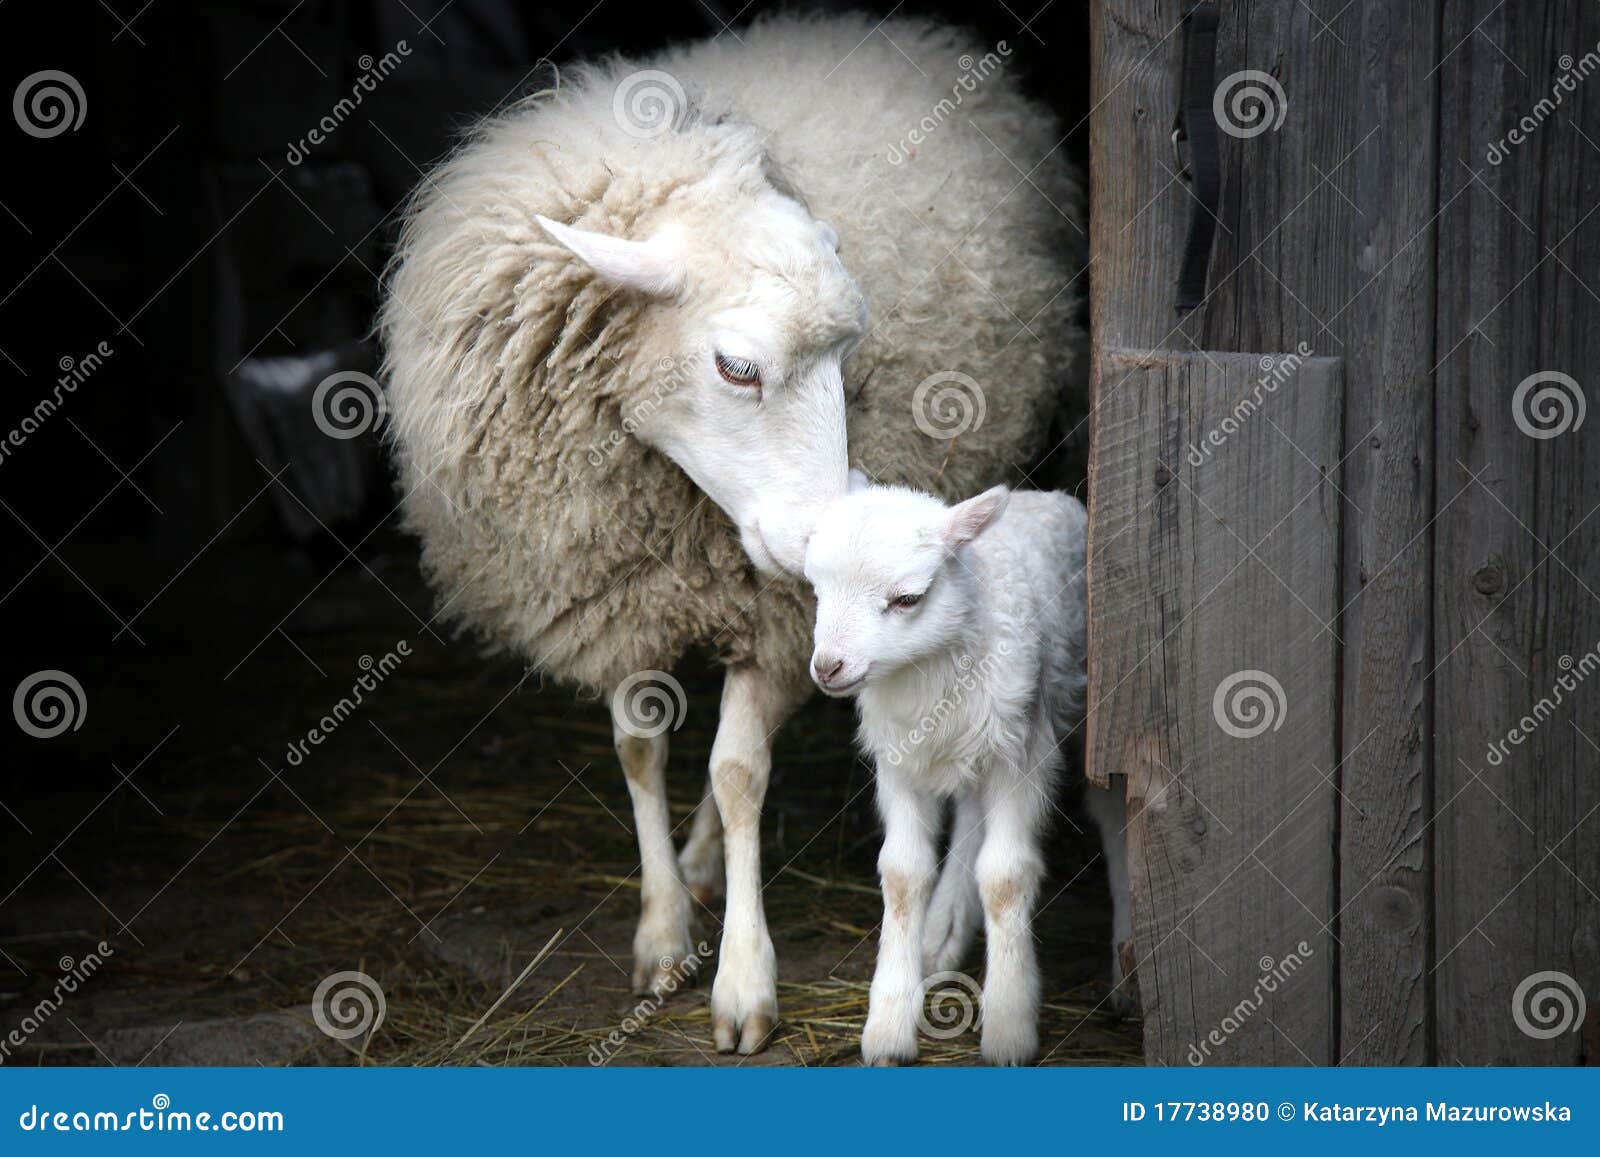 maternal instinct. sheep and lamb.